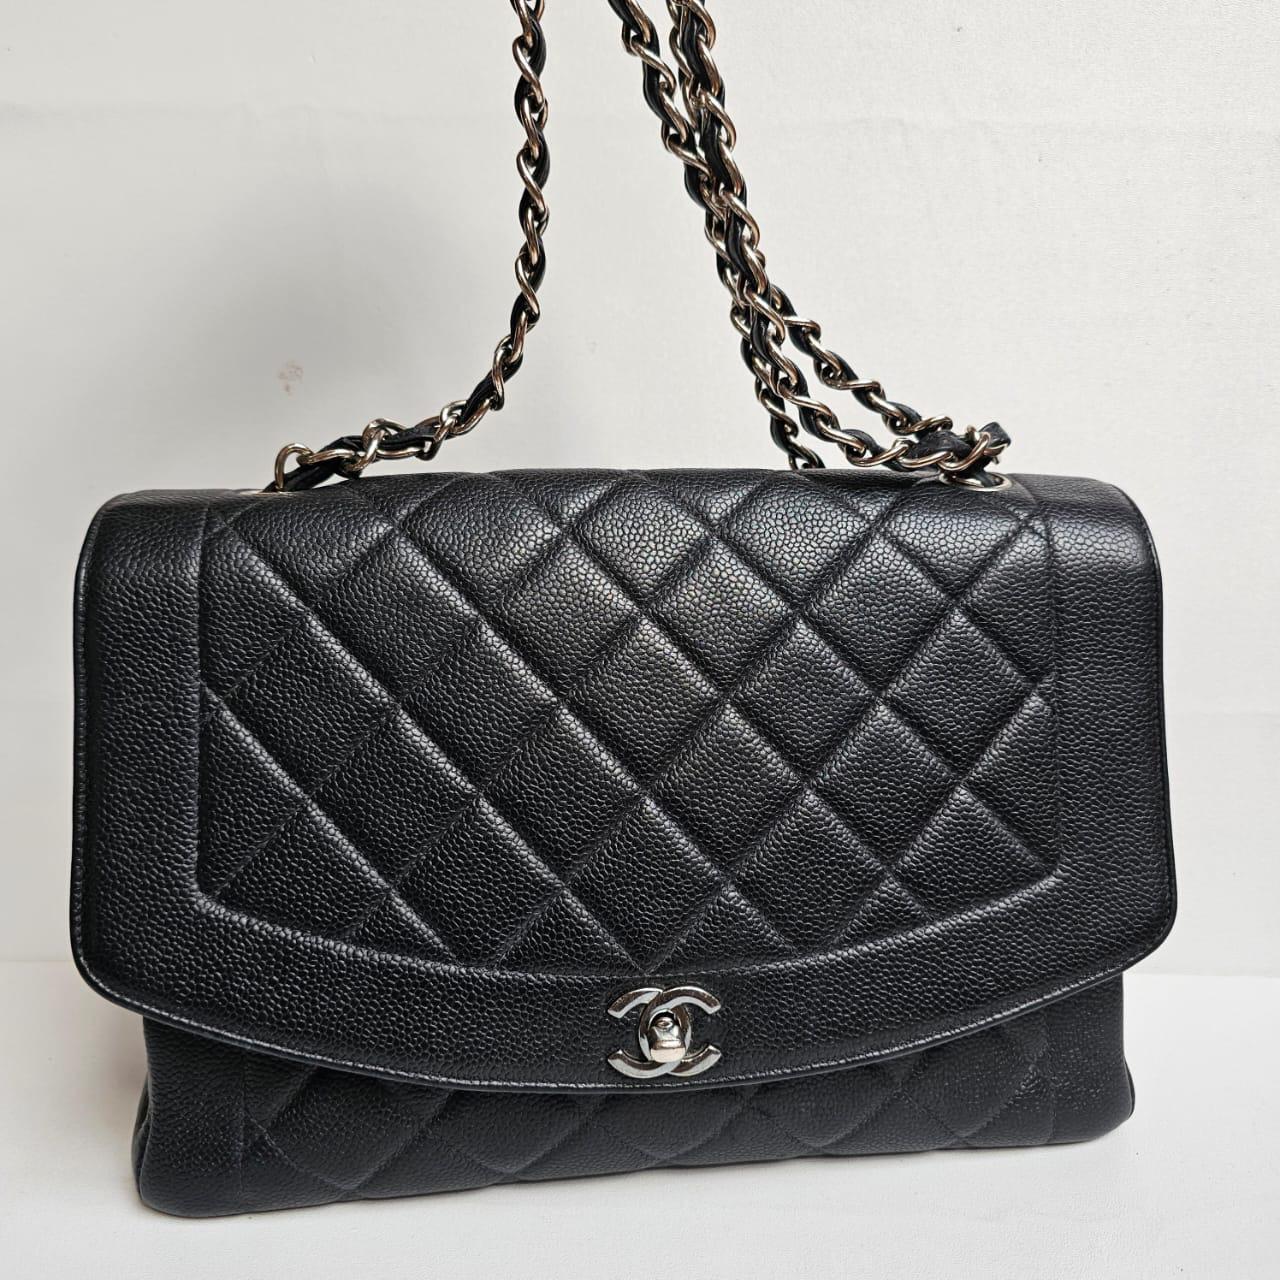 Rare Vintage 1990s Chanel Black Caviar Jumbo Diana Flap Bag For Sale 10